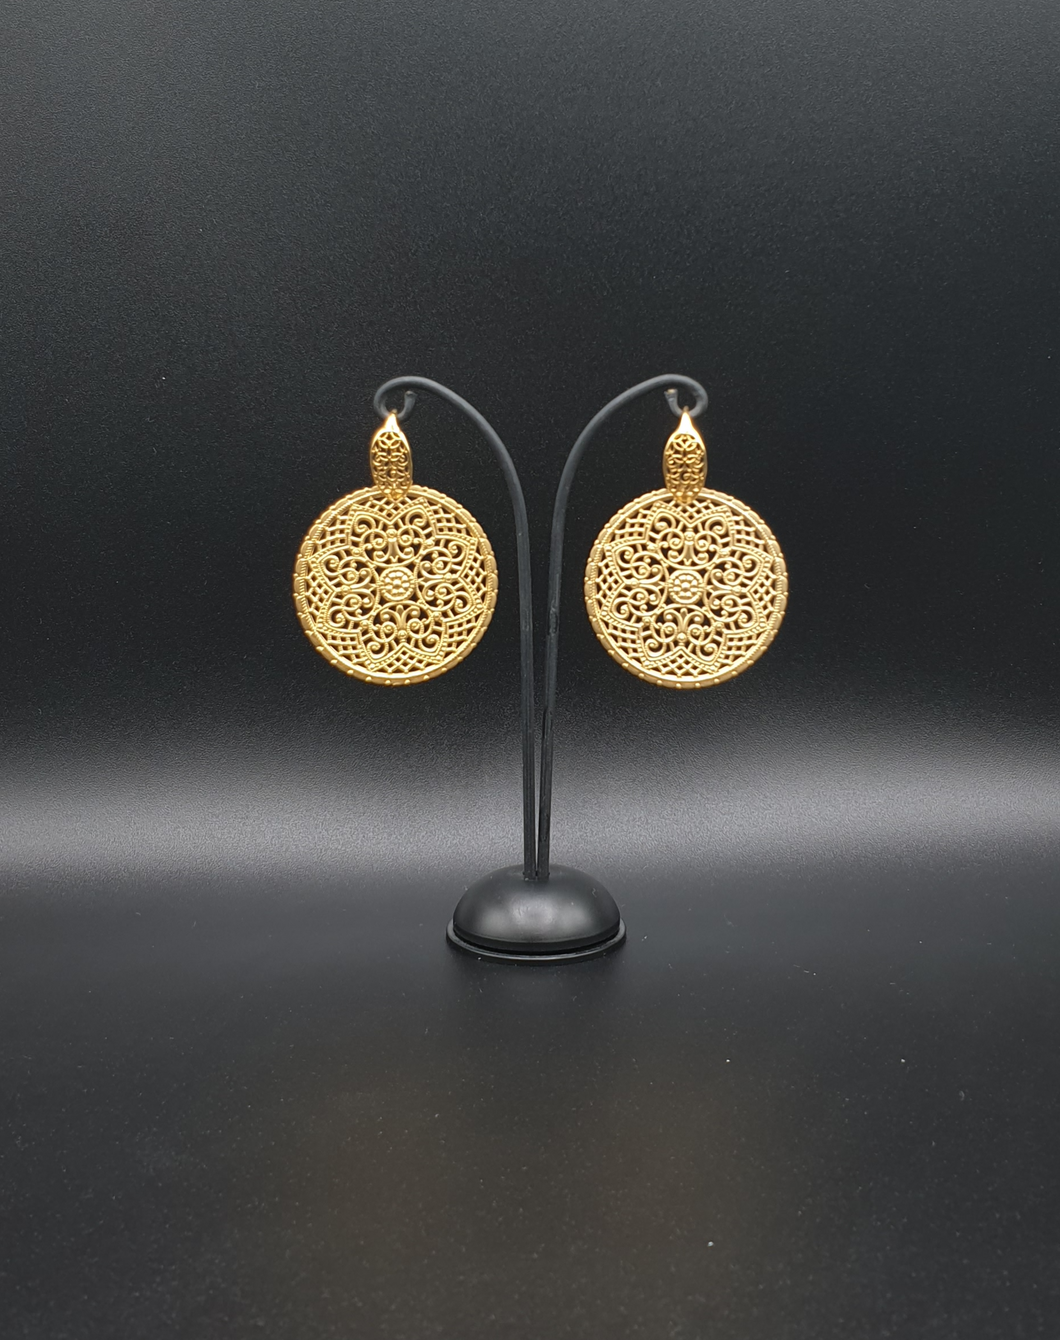 golden metal stud earrings with ornamental elements